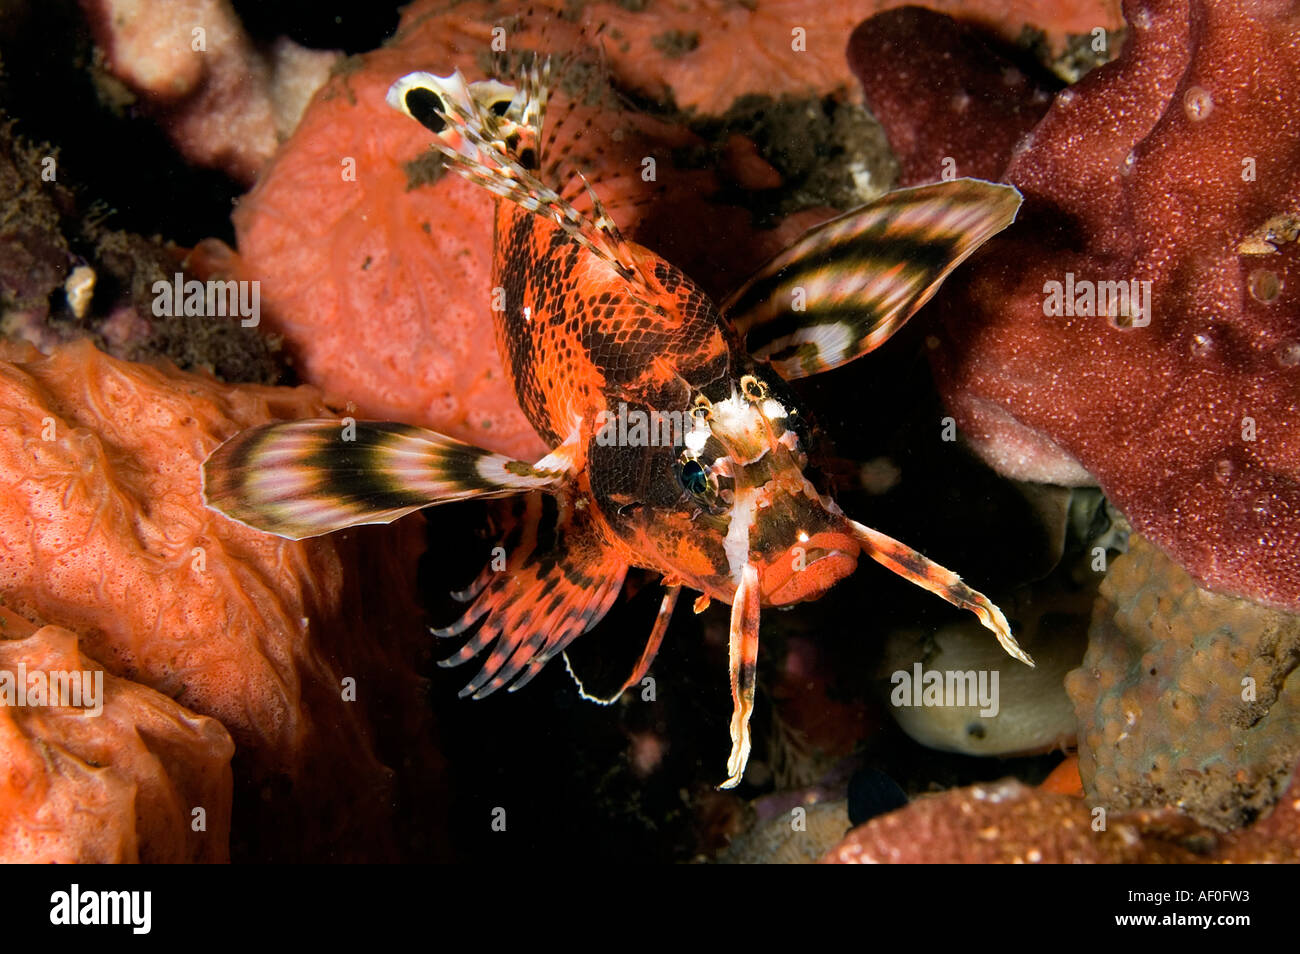 Spotted lionfish, Dendrochirus biocellatus, at night, Bali Indonesia. Stock Photo